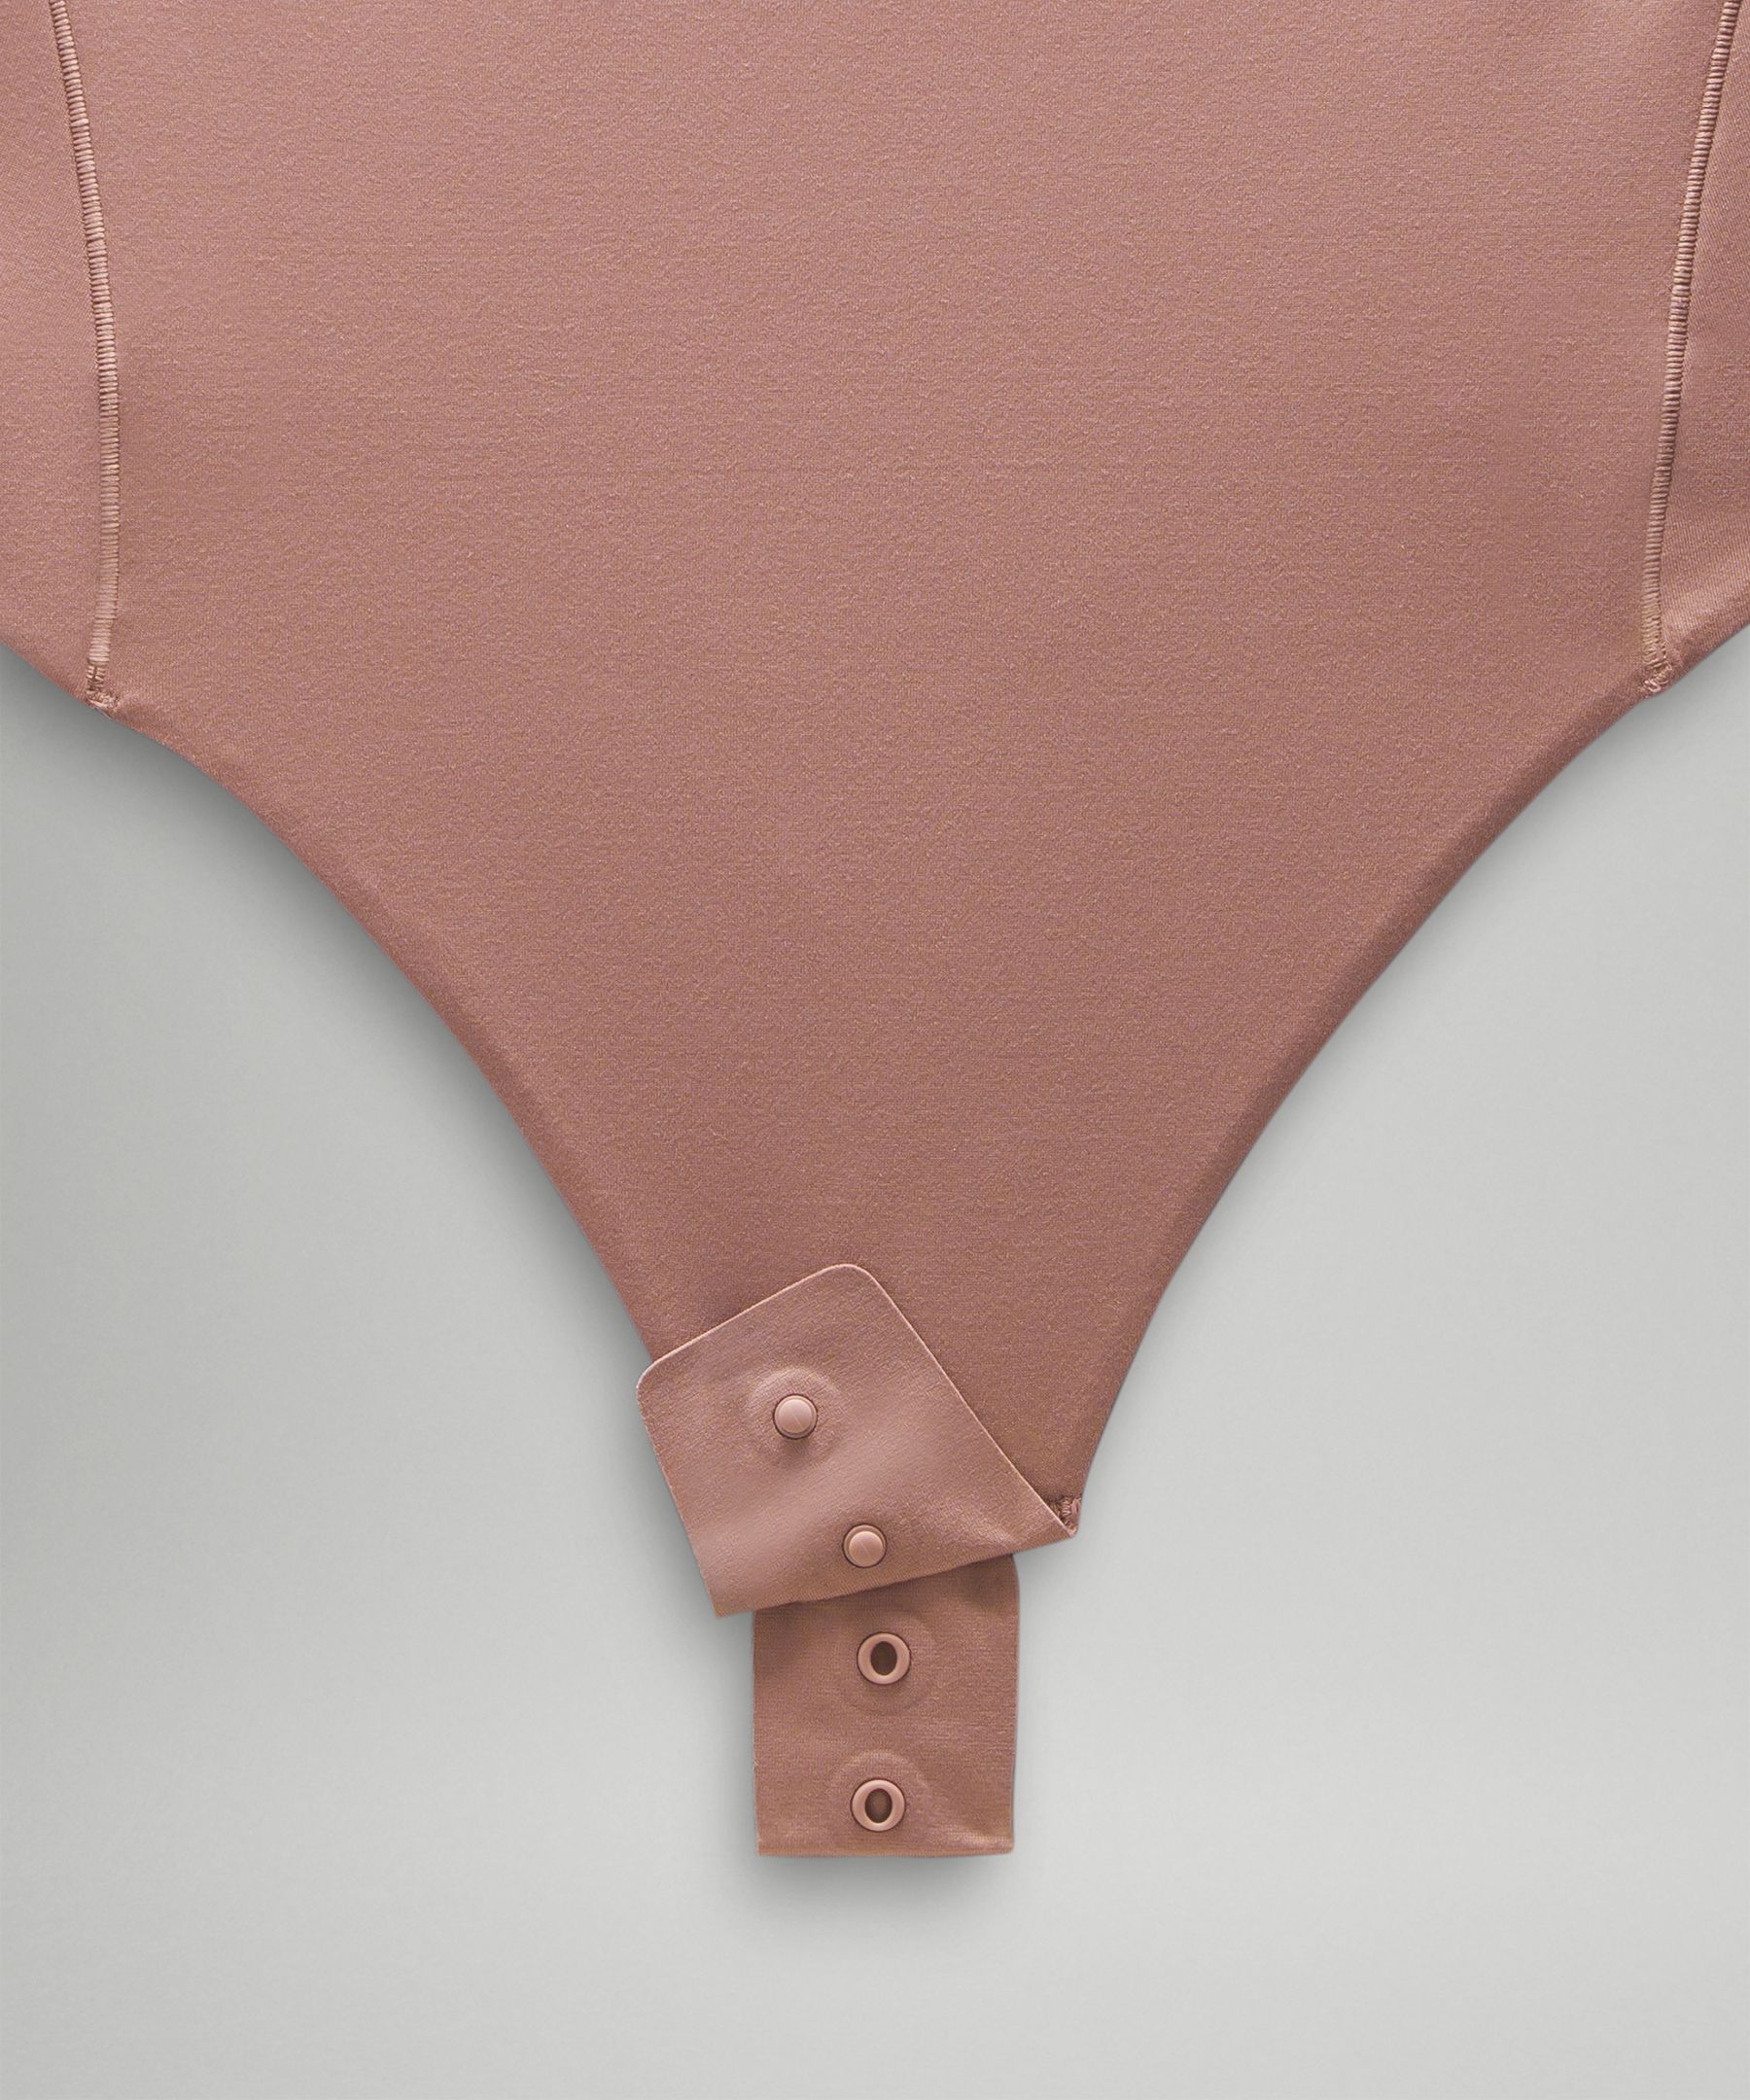 Shop Lululemon Wundermost Bodysuit - Ultra-soft Nulu Asymmetrical Bodysuit